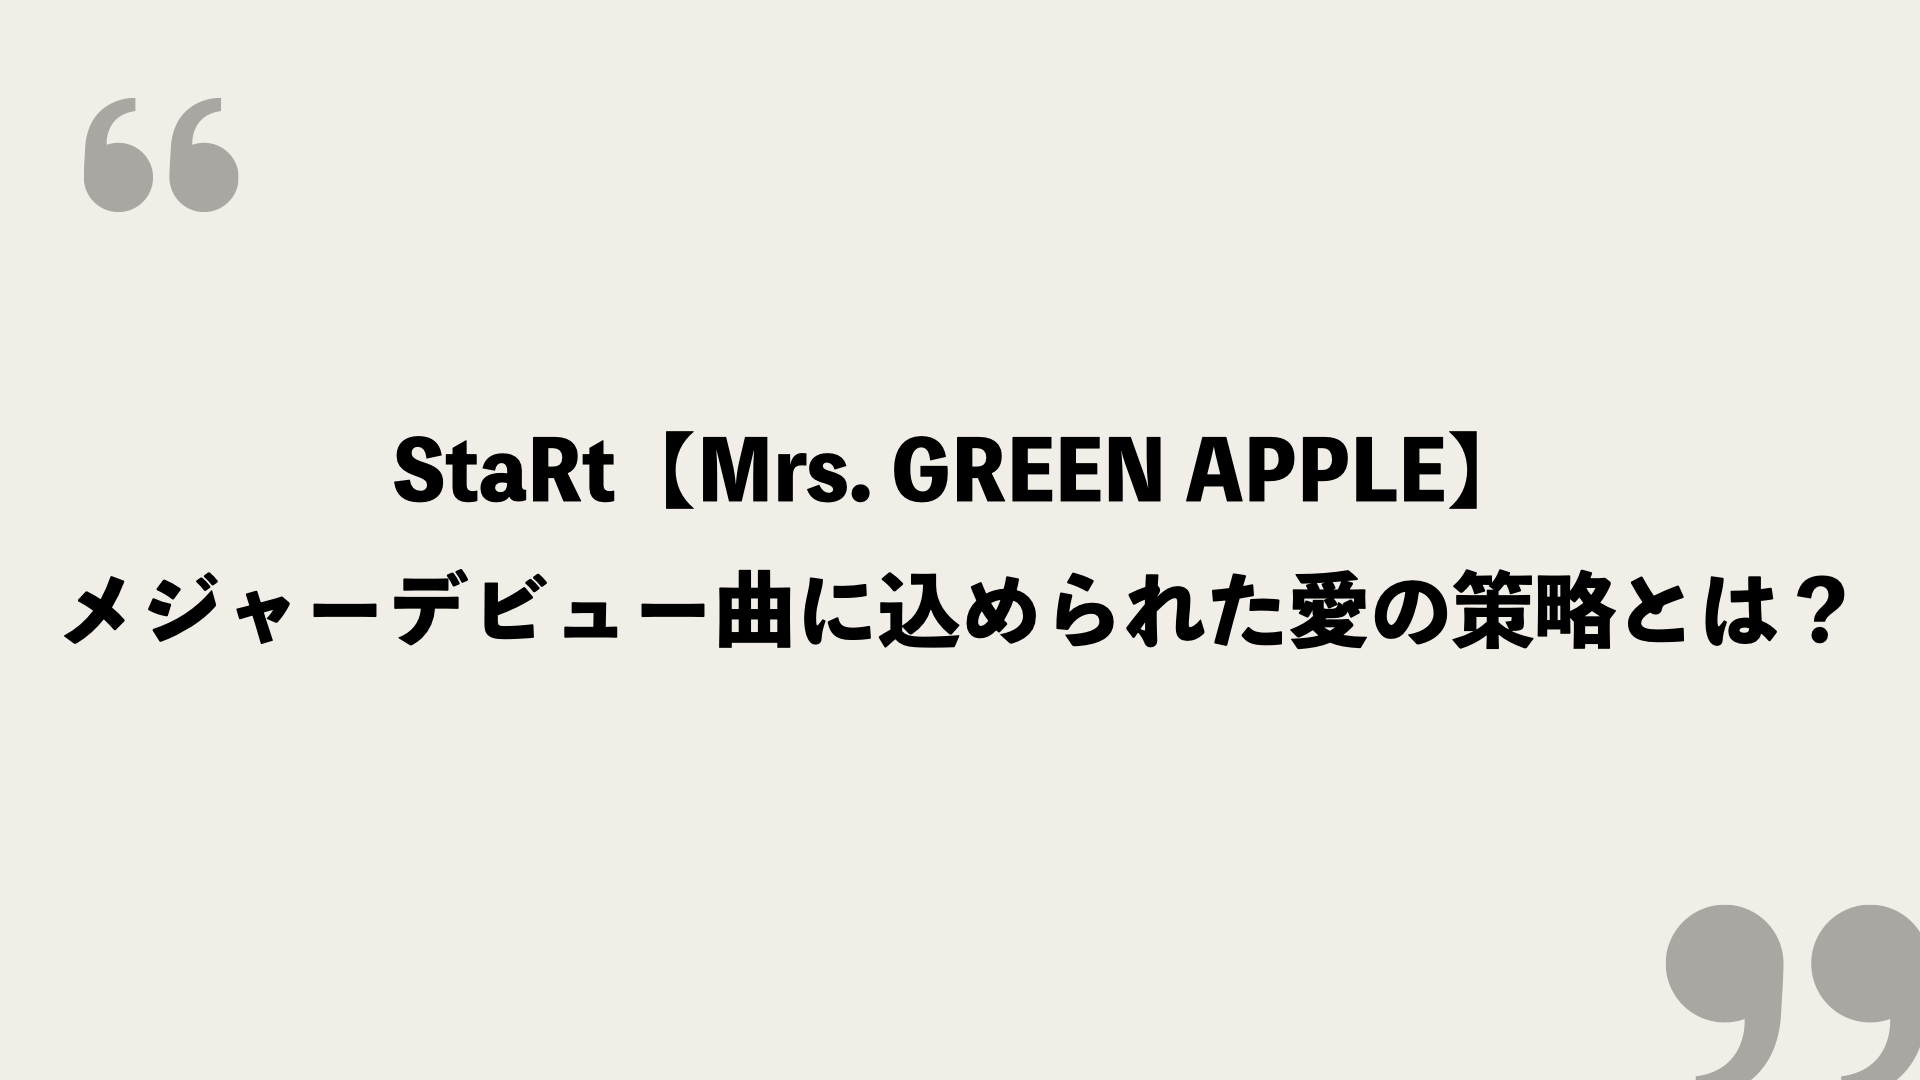 Start Mrs Green Apple 歌詞の意味を考察 メジャーデビュー曲に込められた愛の策略とは Framu Media